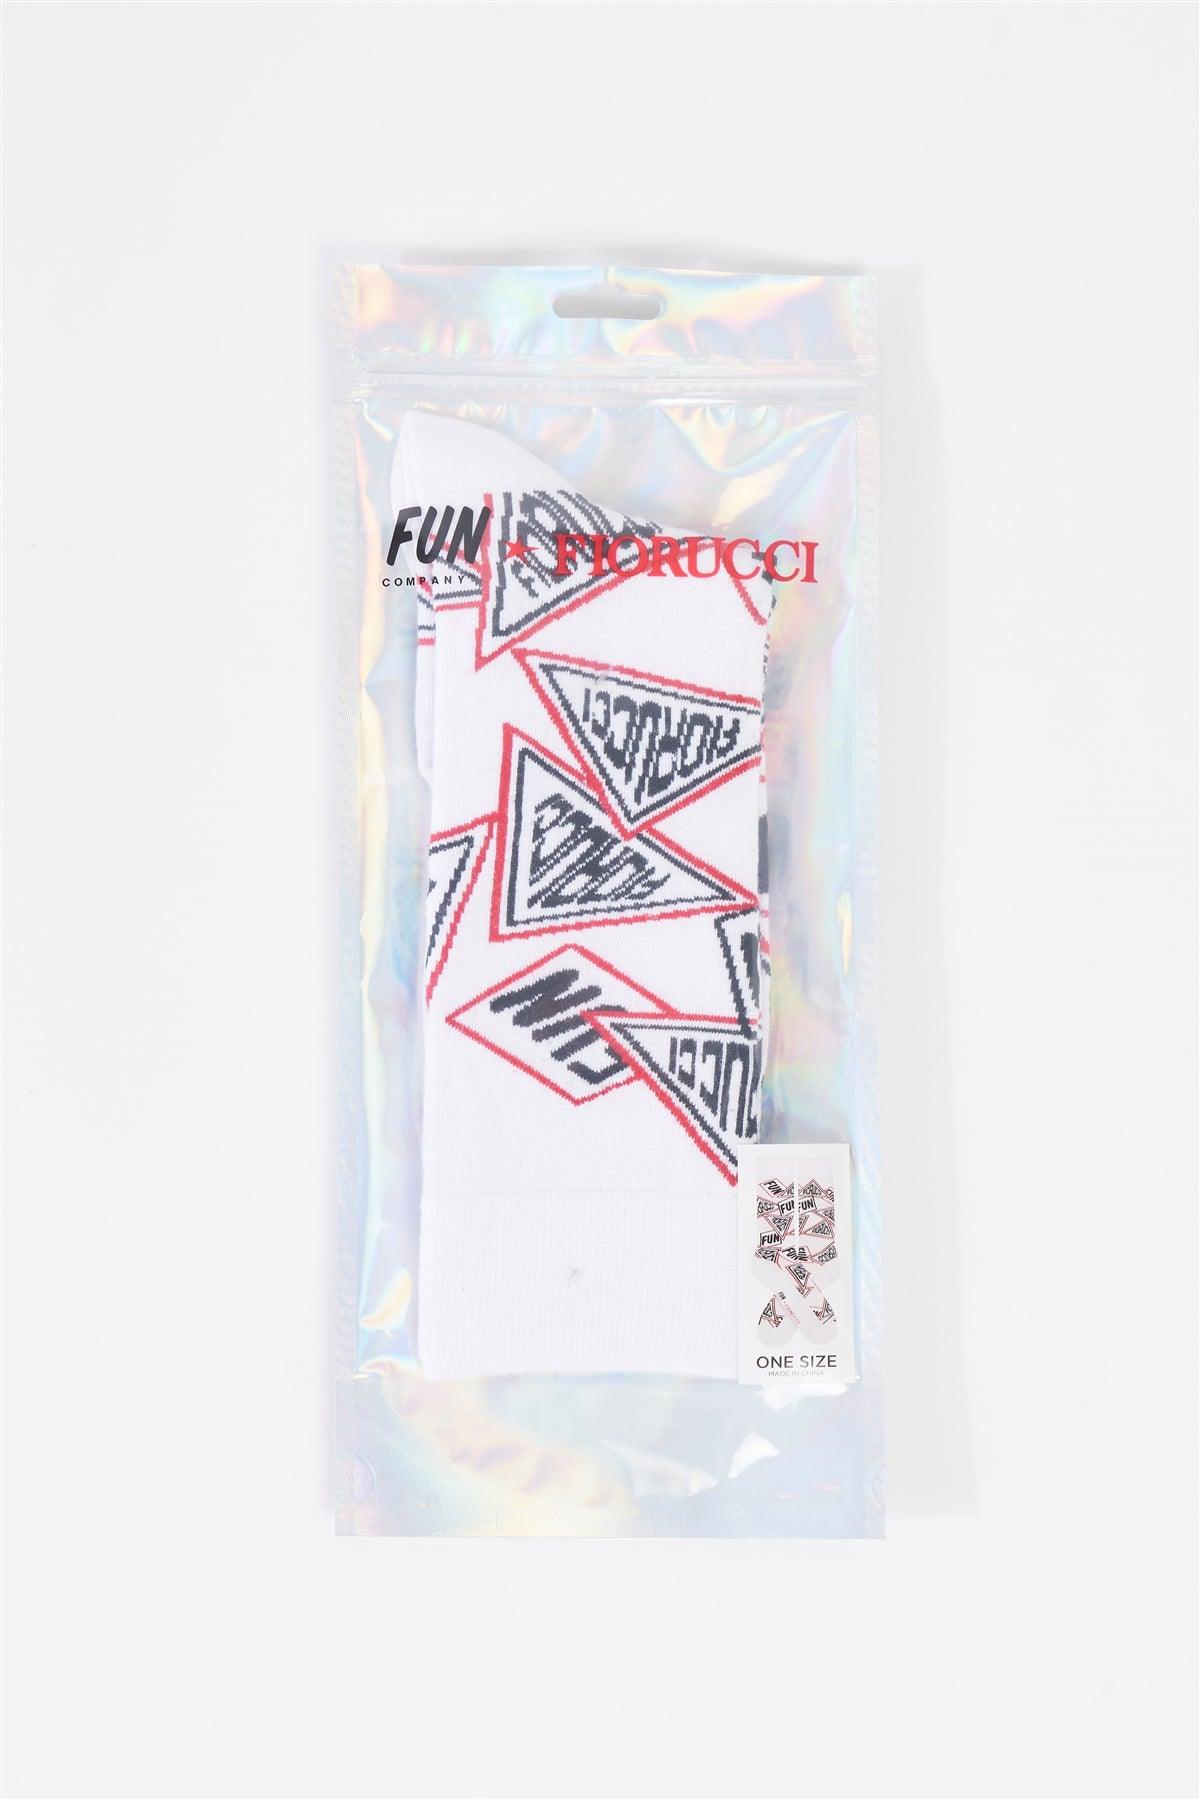 Fiorucci Fun White & Black Over The Calf Printed Logo Detail Socks /3 Pairs